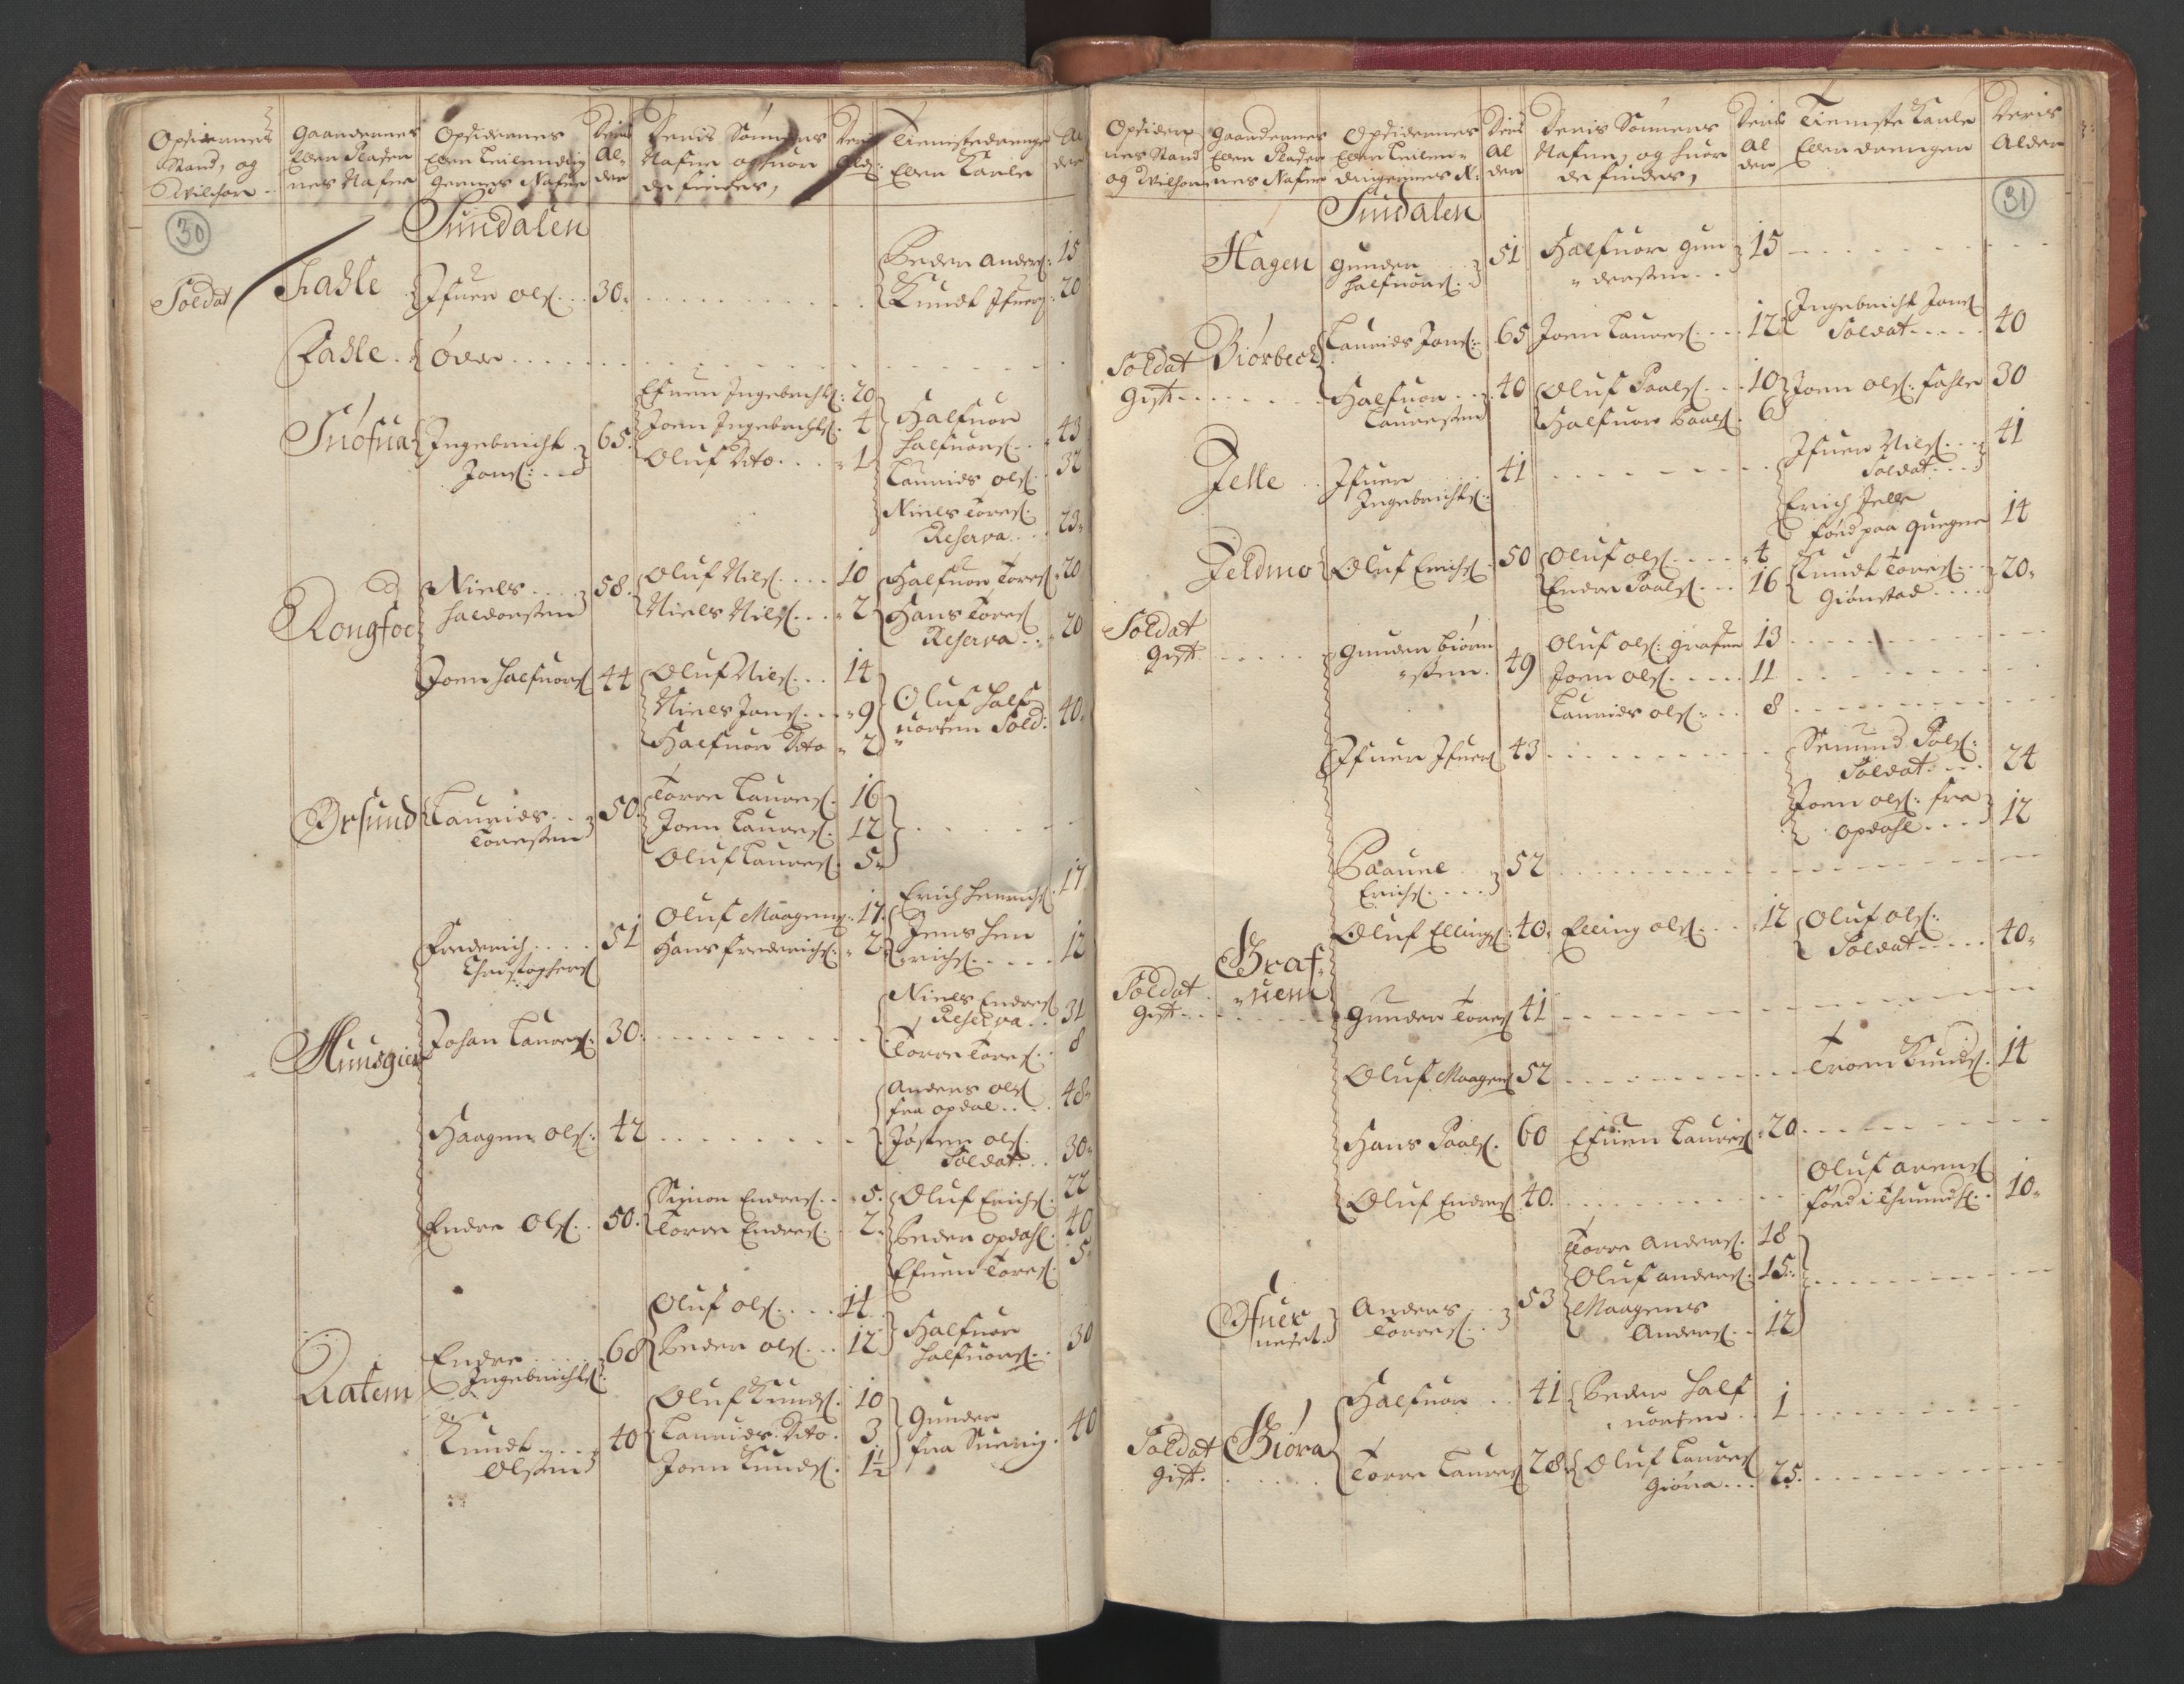 RA, Census (manntall) 1701, no. 11: Nordmøre fogderi and Romsdal fogderi, 1701, p. 30-31